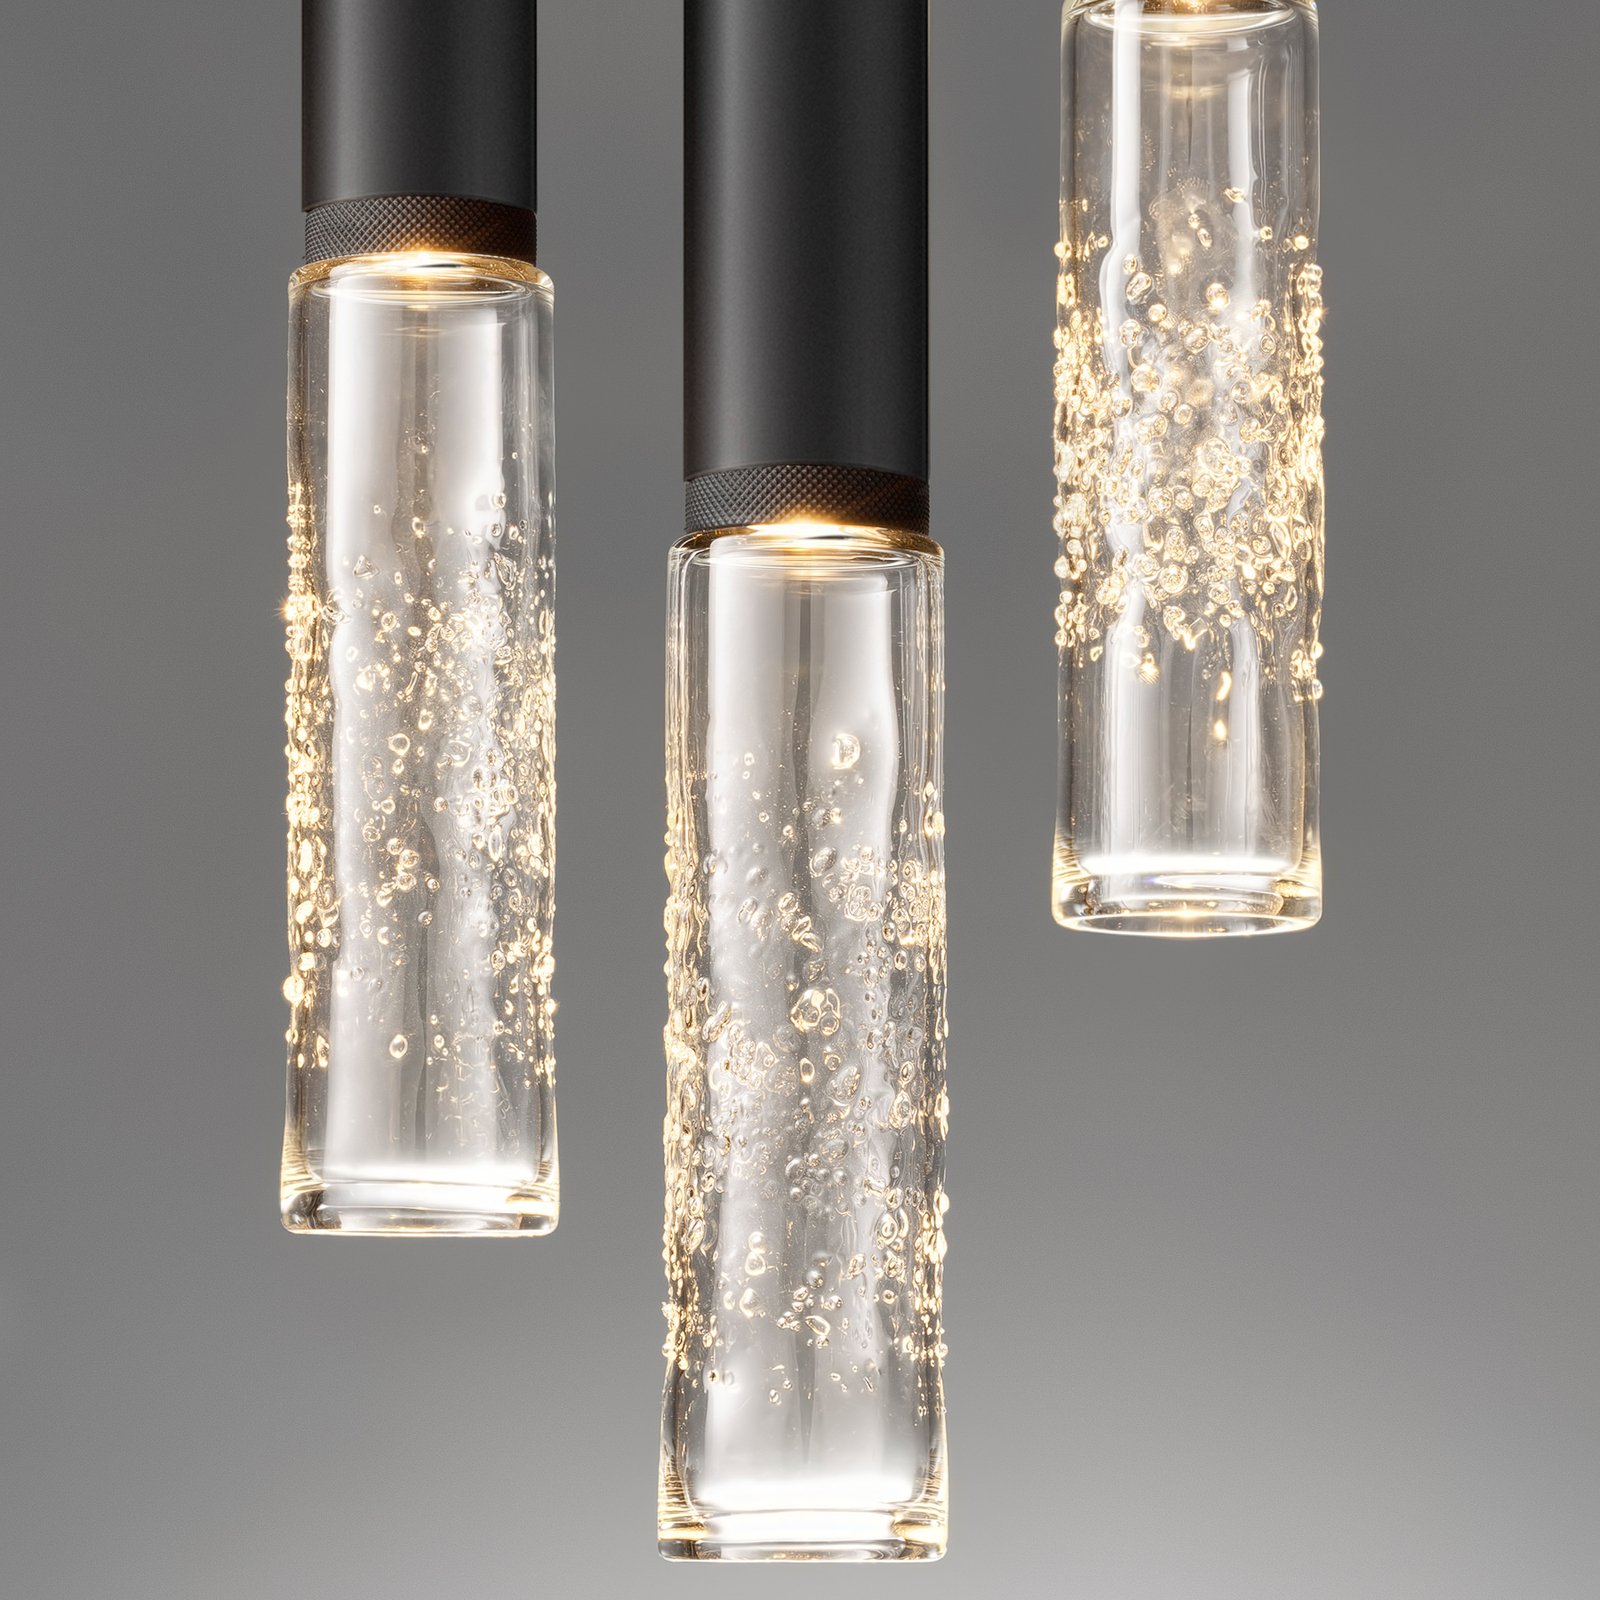 OLEV Beam Stick Glass on/off 2.700K 35,3cm čierna